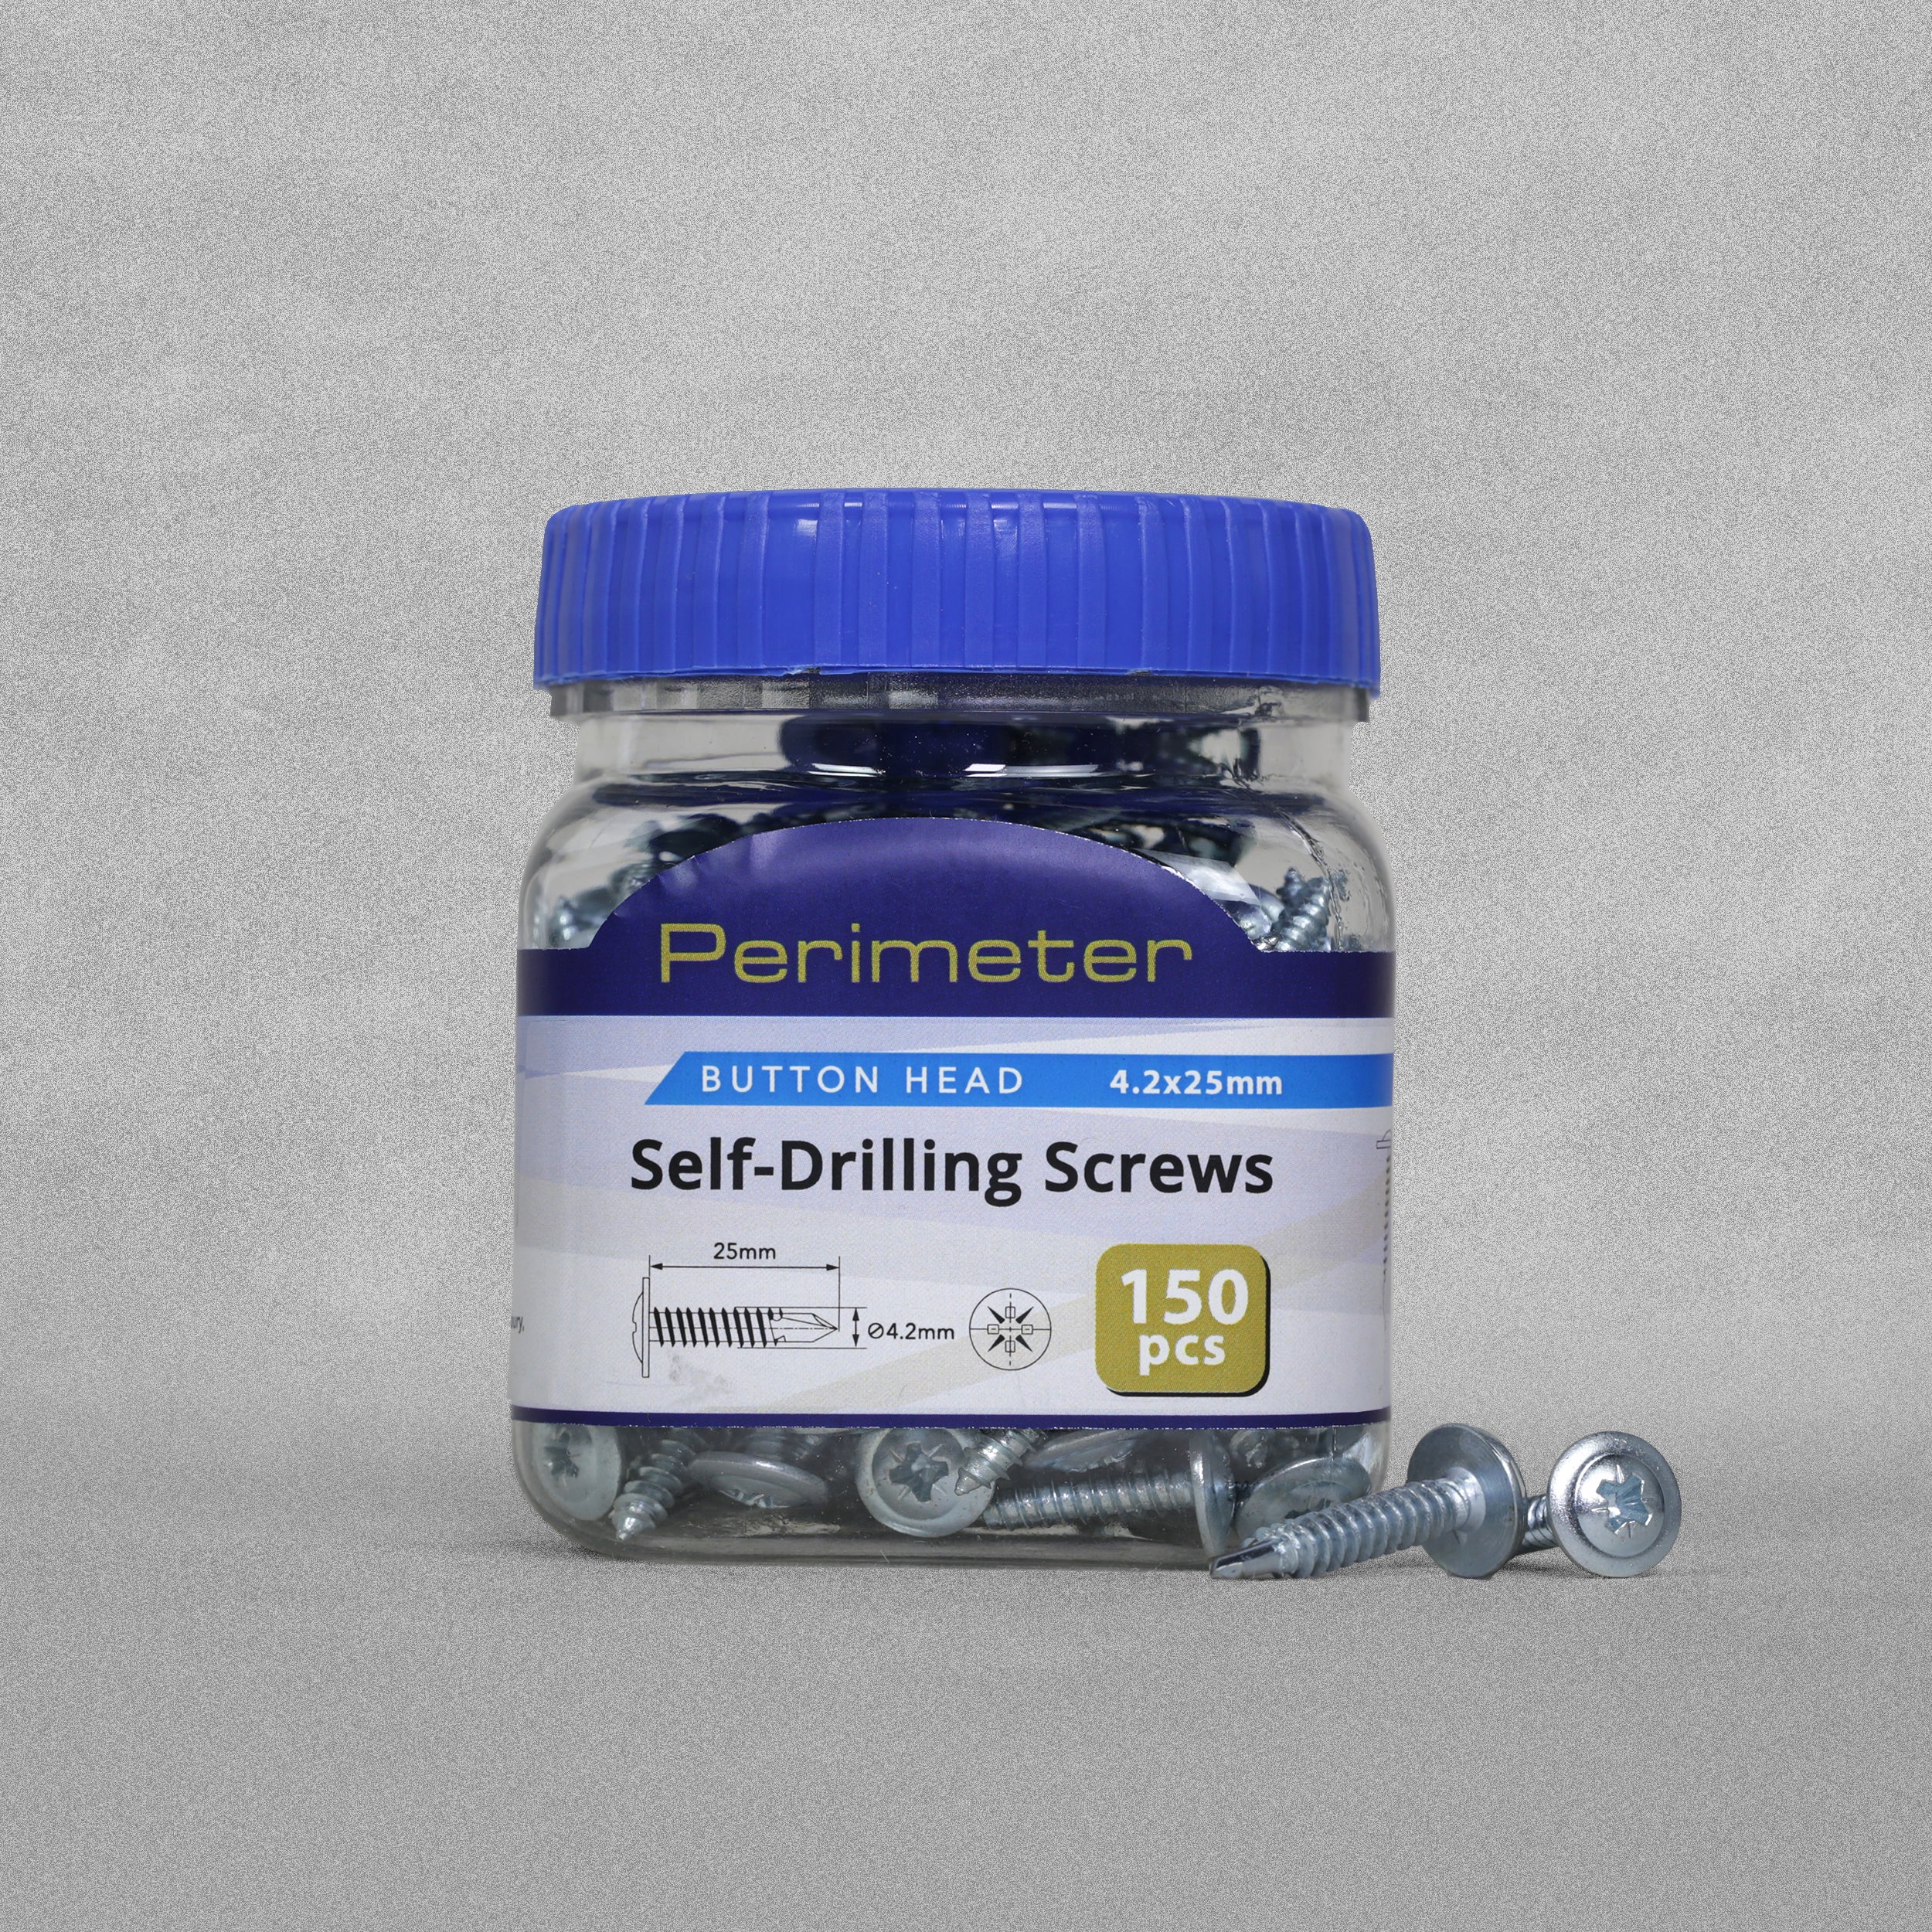 Perimeter Self-Drilling Screws - Button Head Pozi Drive 4.2x25mm - Pack of 150